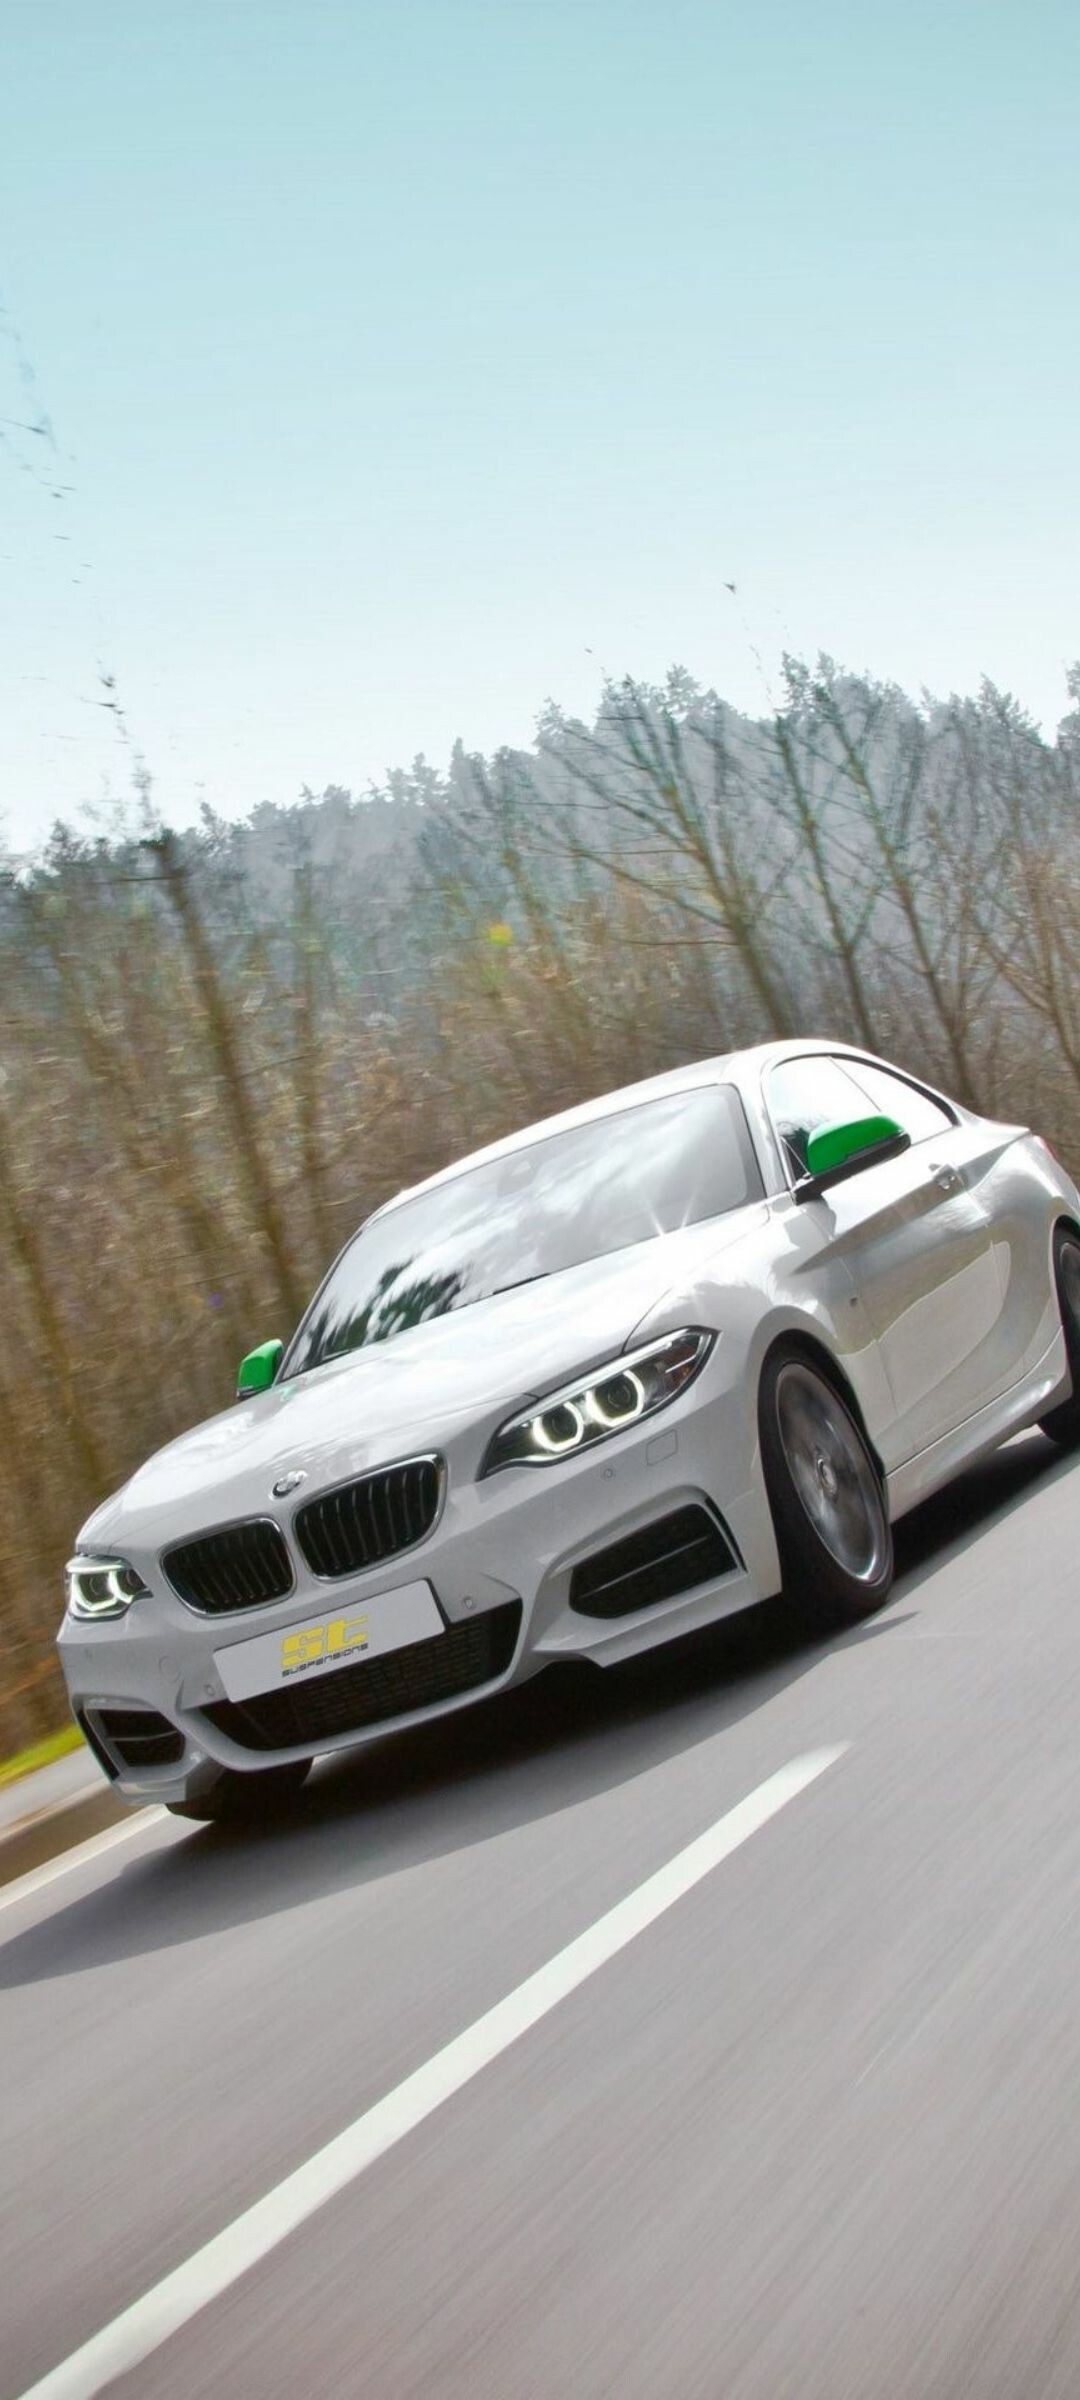 BMW 2 Series: A German automotive manufacturer of luxury vehicles, C-segment. 1080x2400 HD Wallpaper.